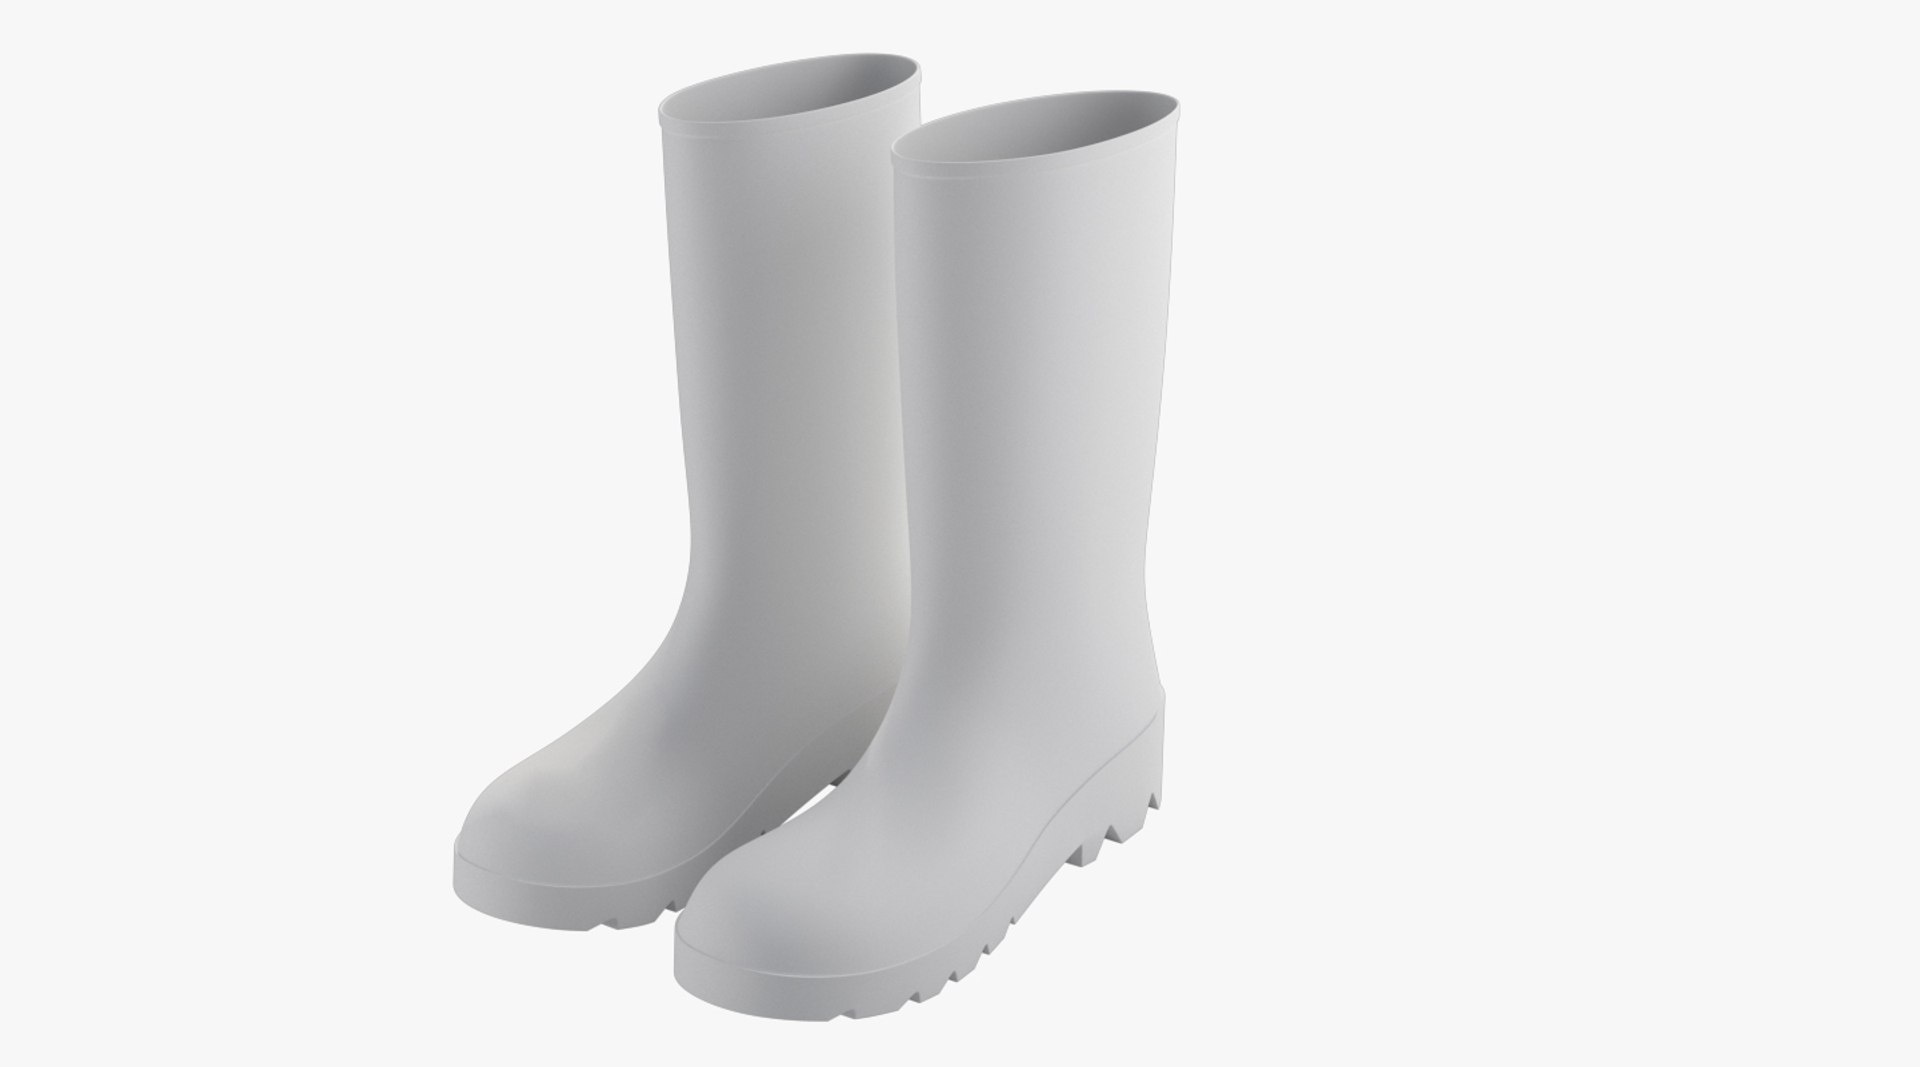 Boots rubber 3D model - TurboSquid 1390154